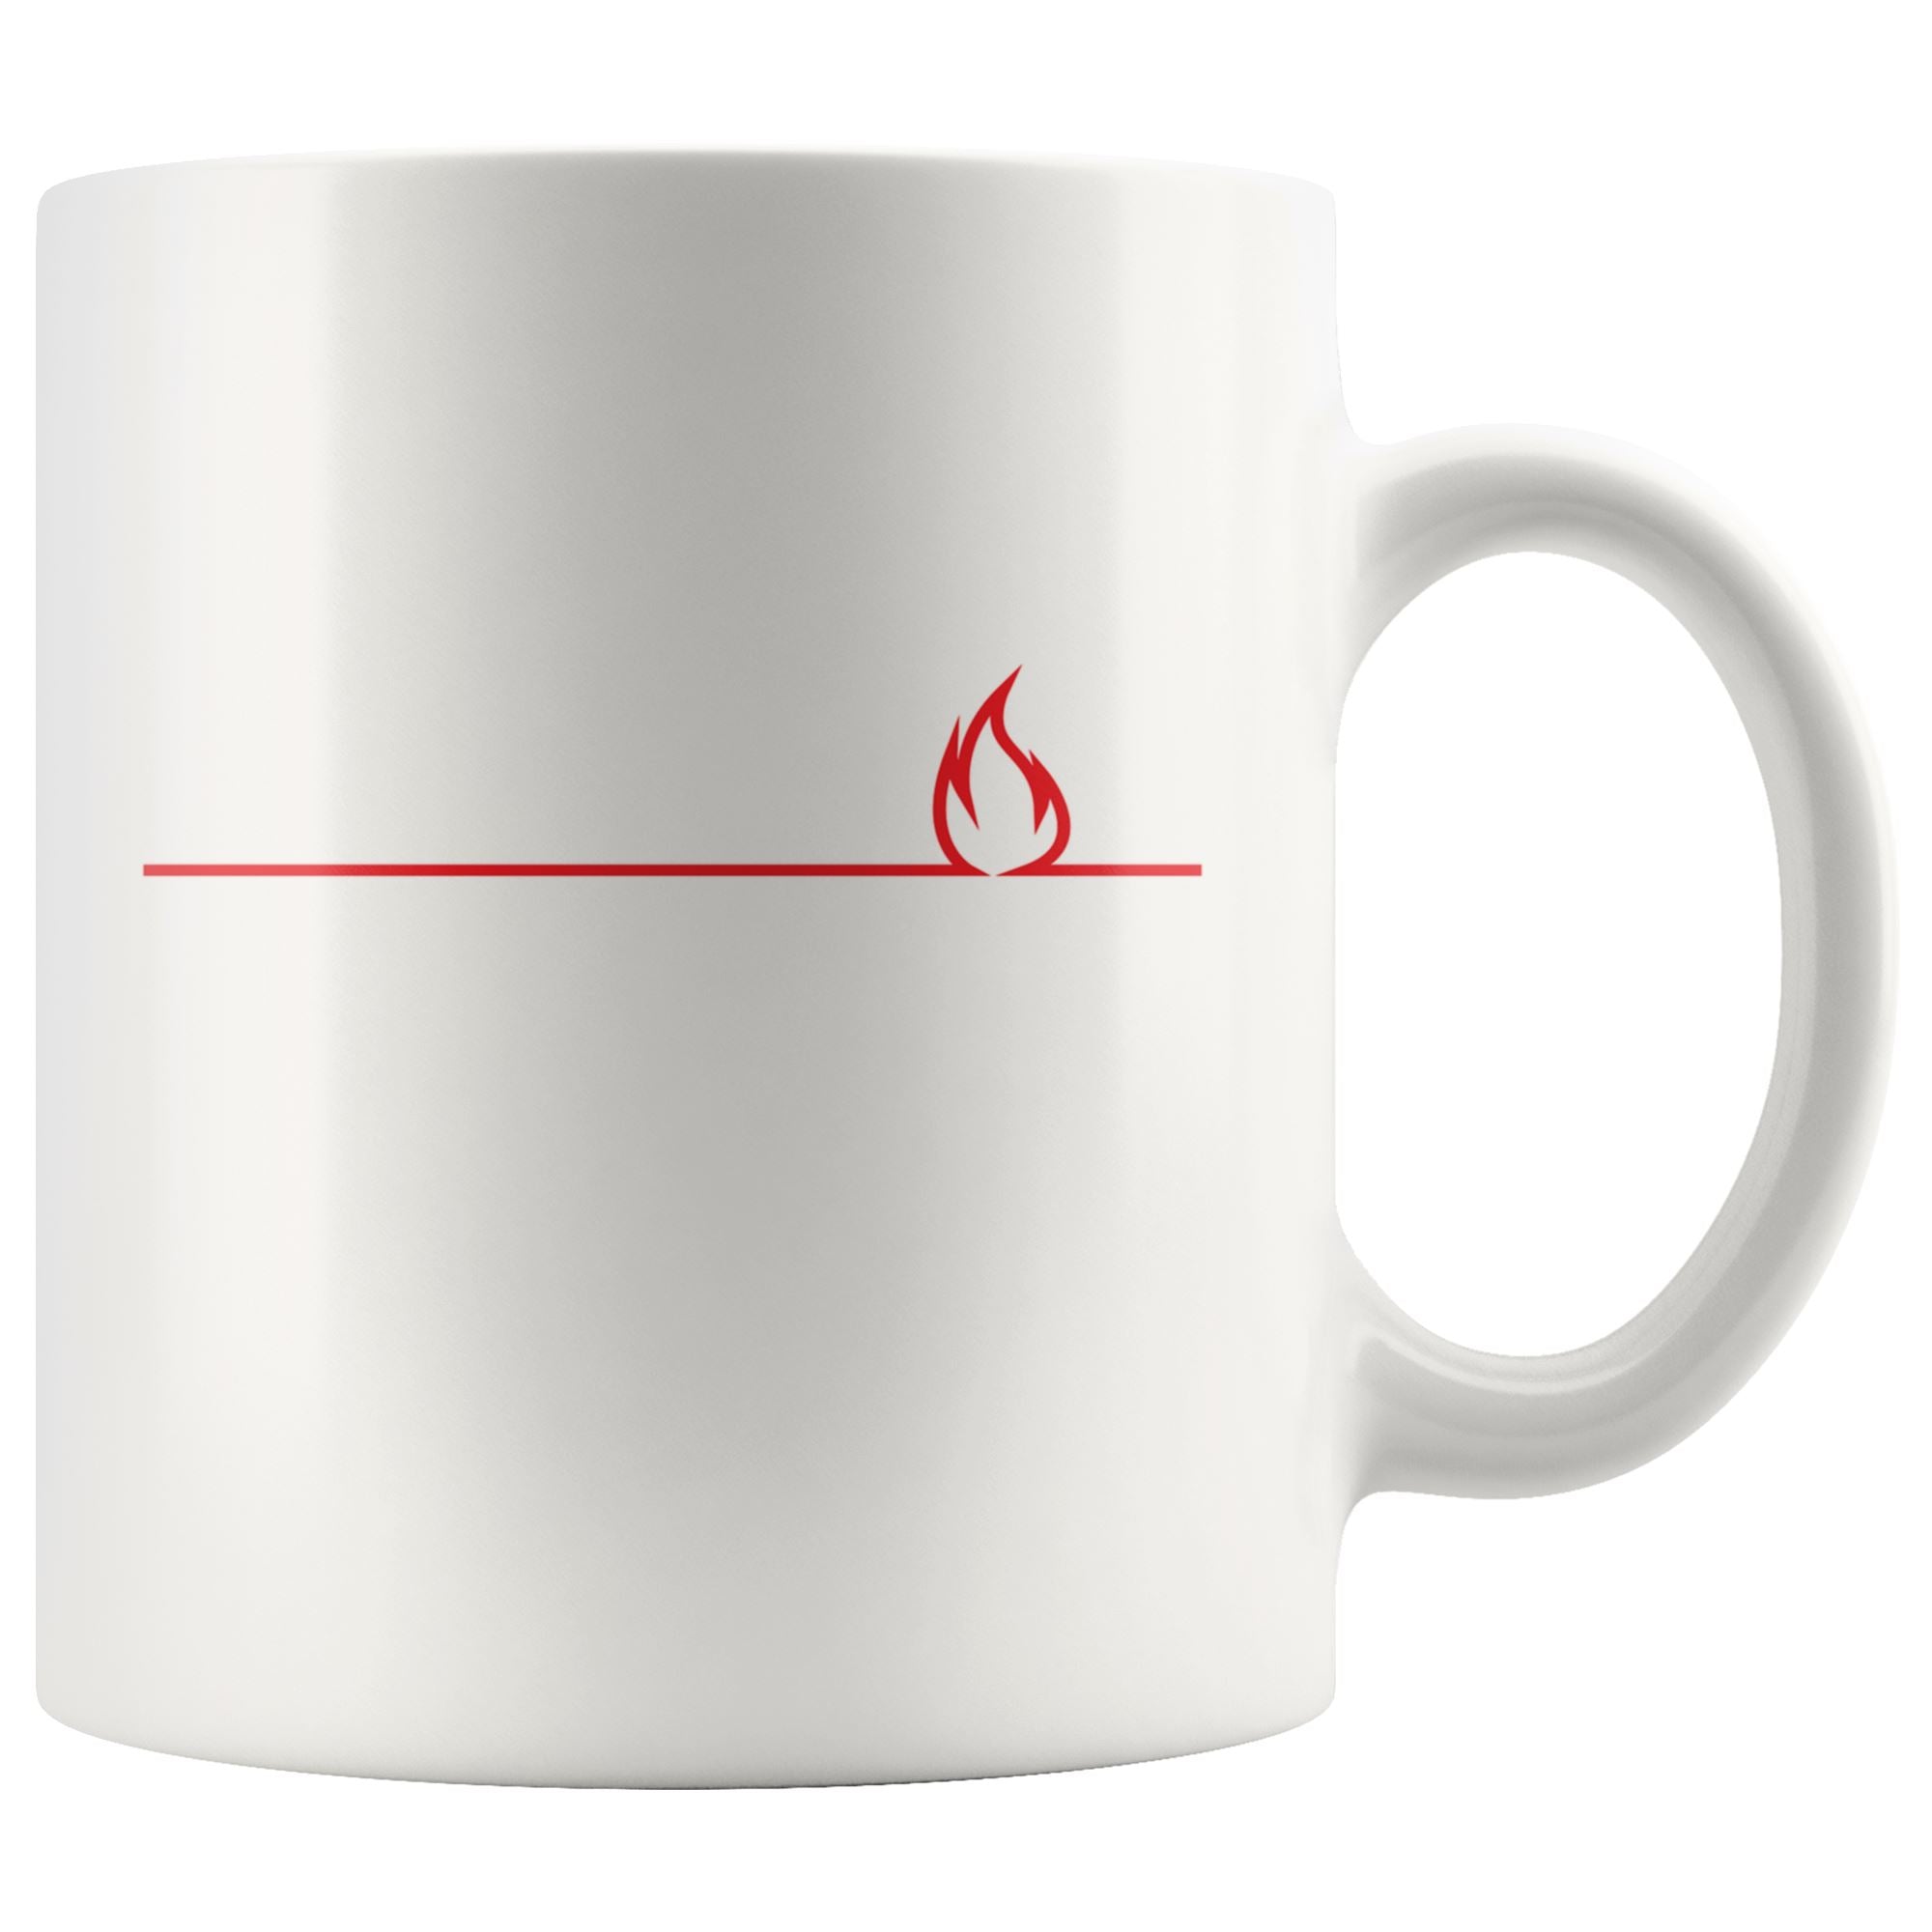 Thin Red Line Drinkware teelaunch 11oz Mug 